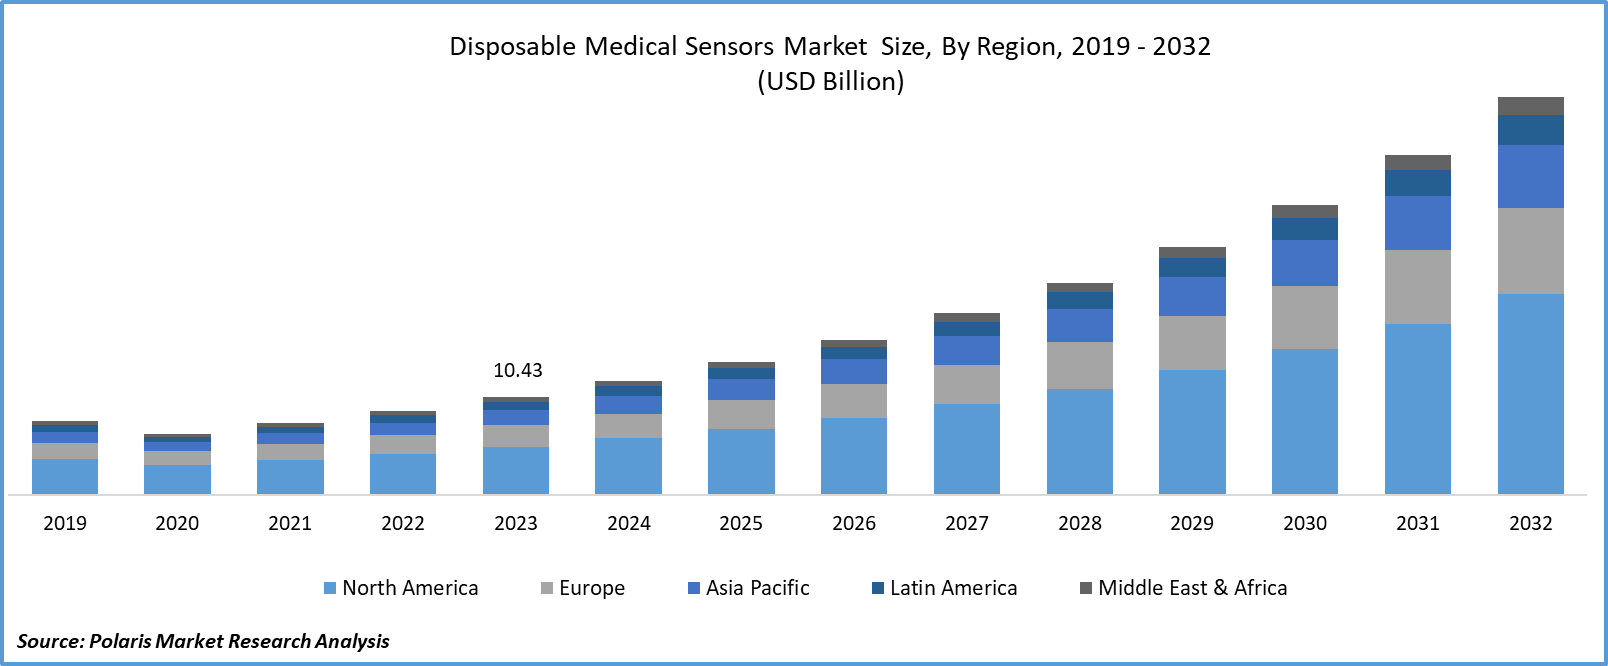 Disposable Medical Sensors Market Size